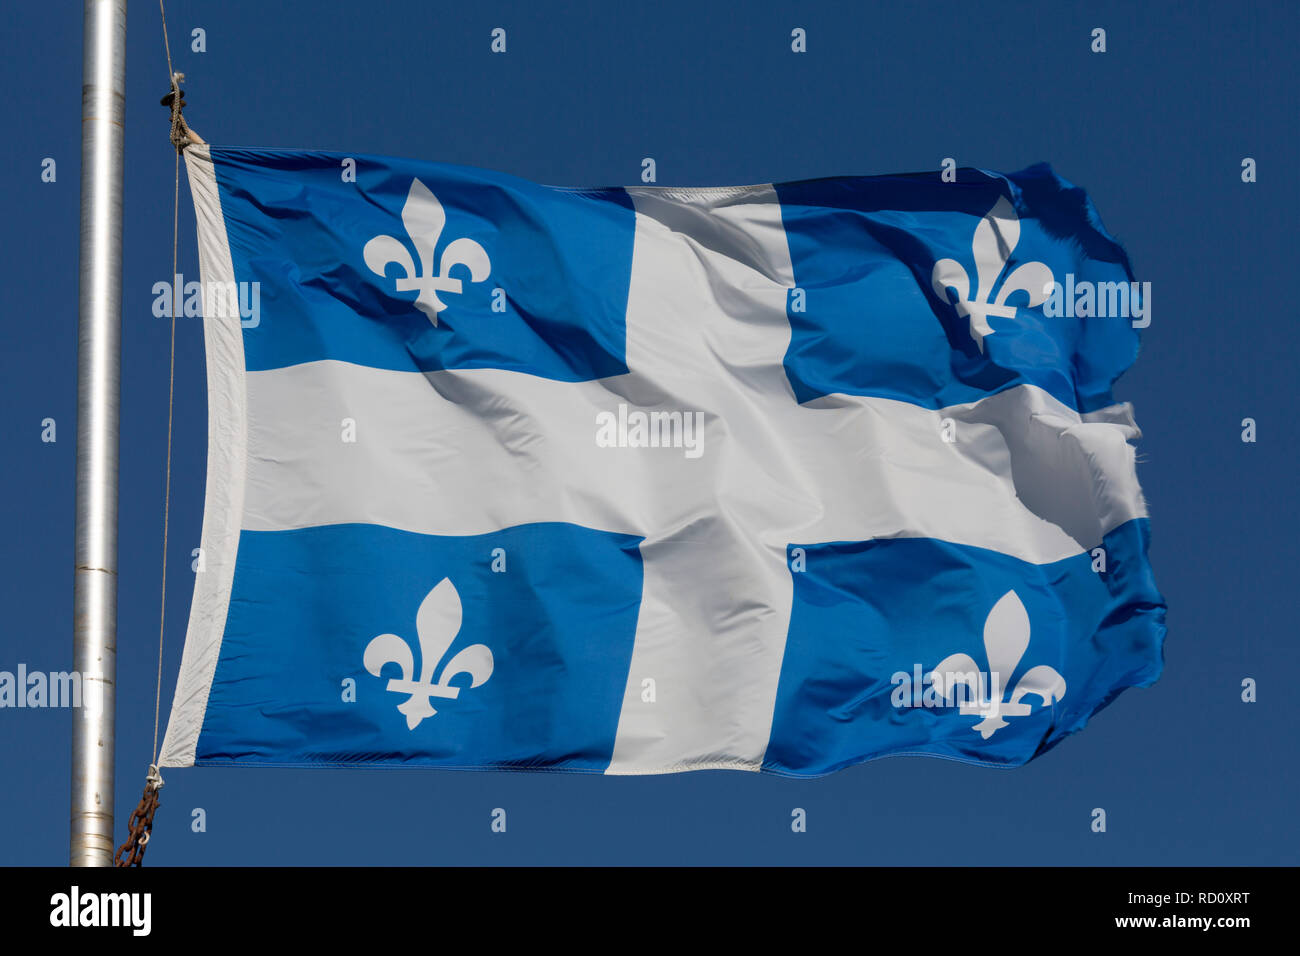 The provincial flag of Quebec flies in Quebec, Canada. The blue and white flag bears four fleur-de-lys emblems. Stock Photo